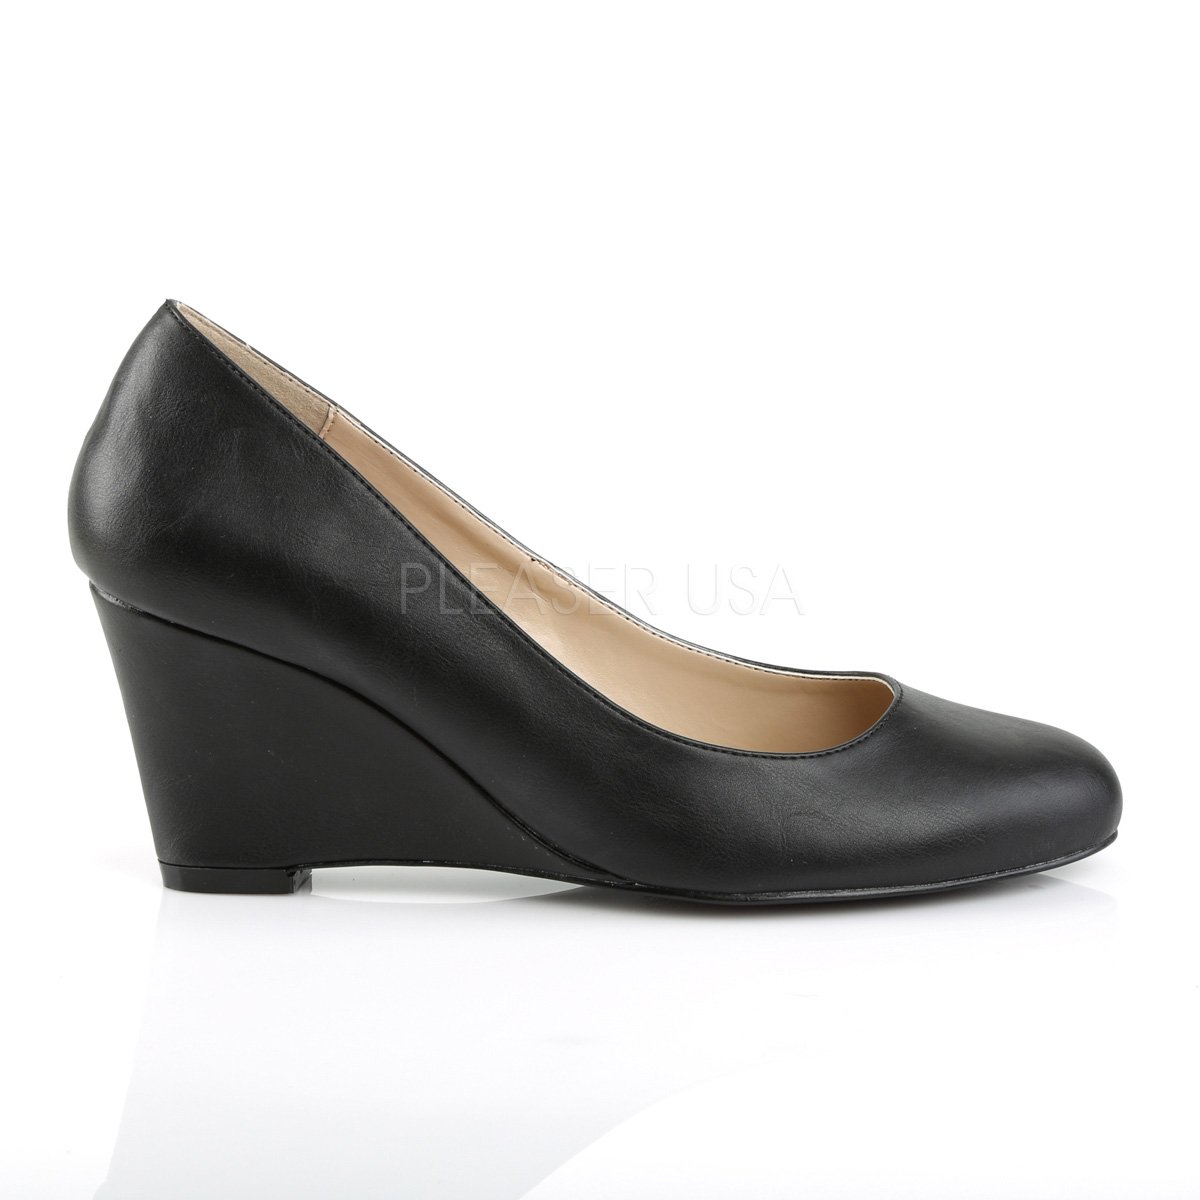 3 Inch Heels | Buy Online from Australia | OtherWorld Shoes